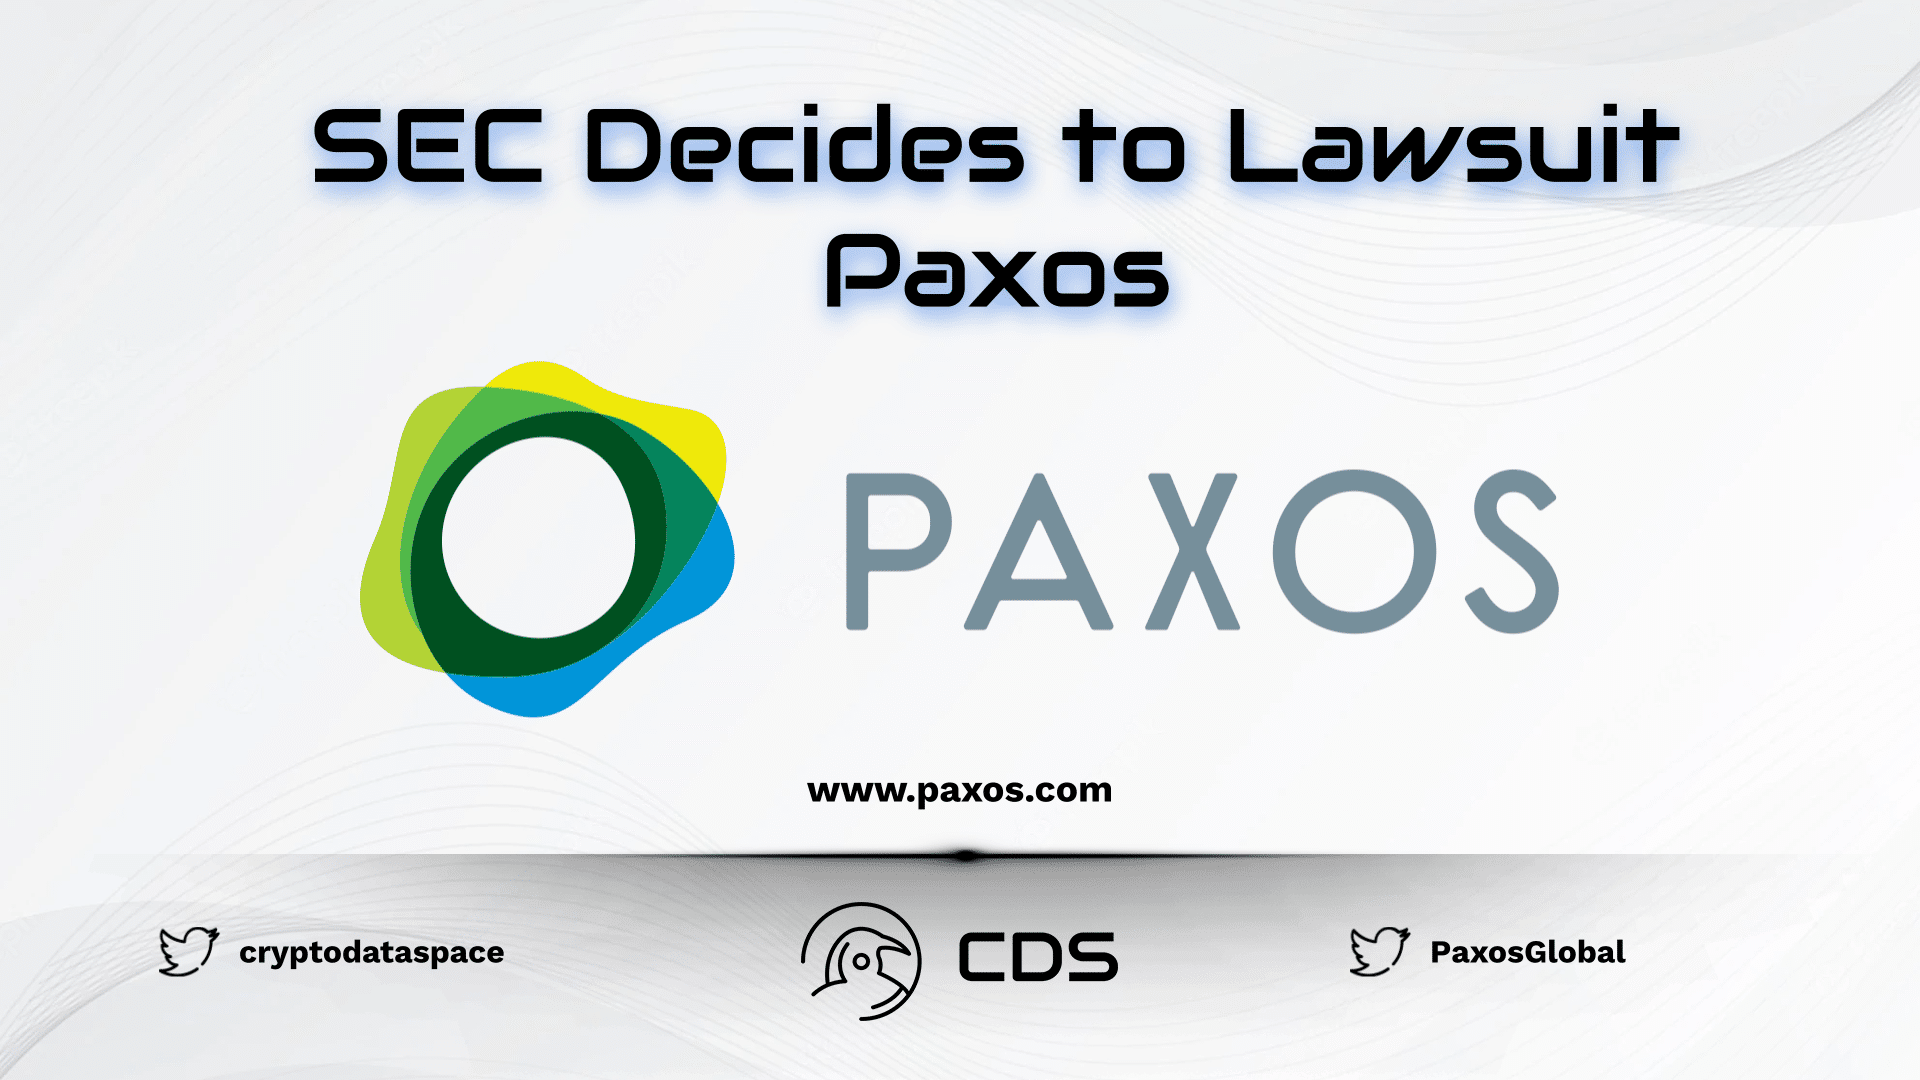 SEC Decides to Lawsuit Paxos